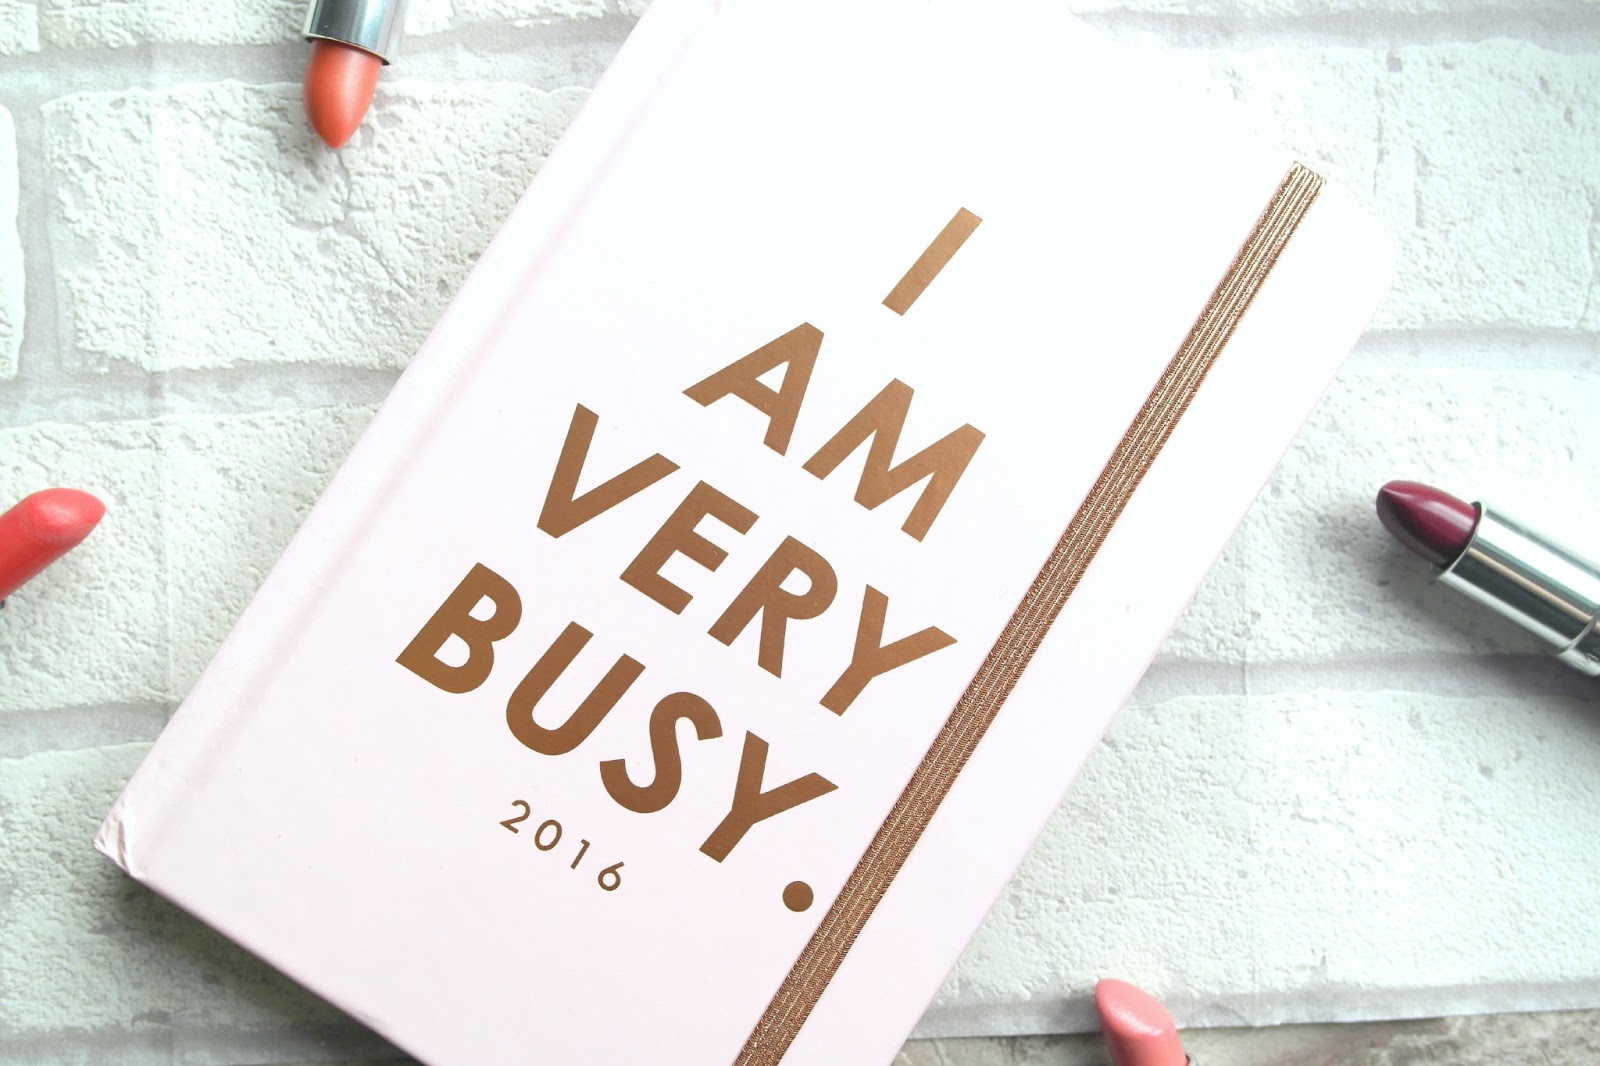 Its my book. I'M very busy. I am busy. I'M very busy Lettering.